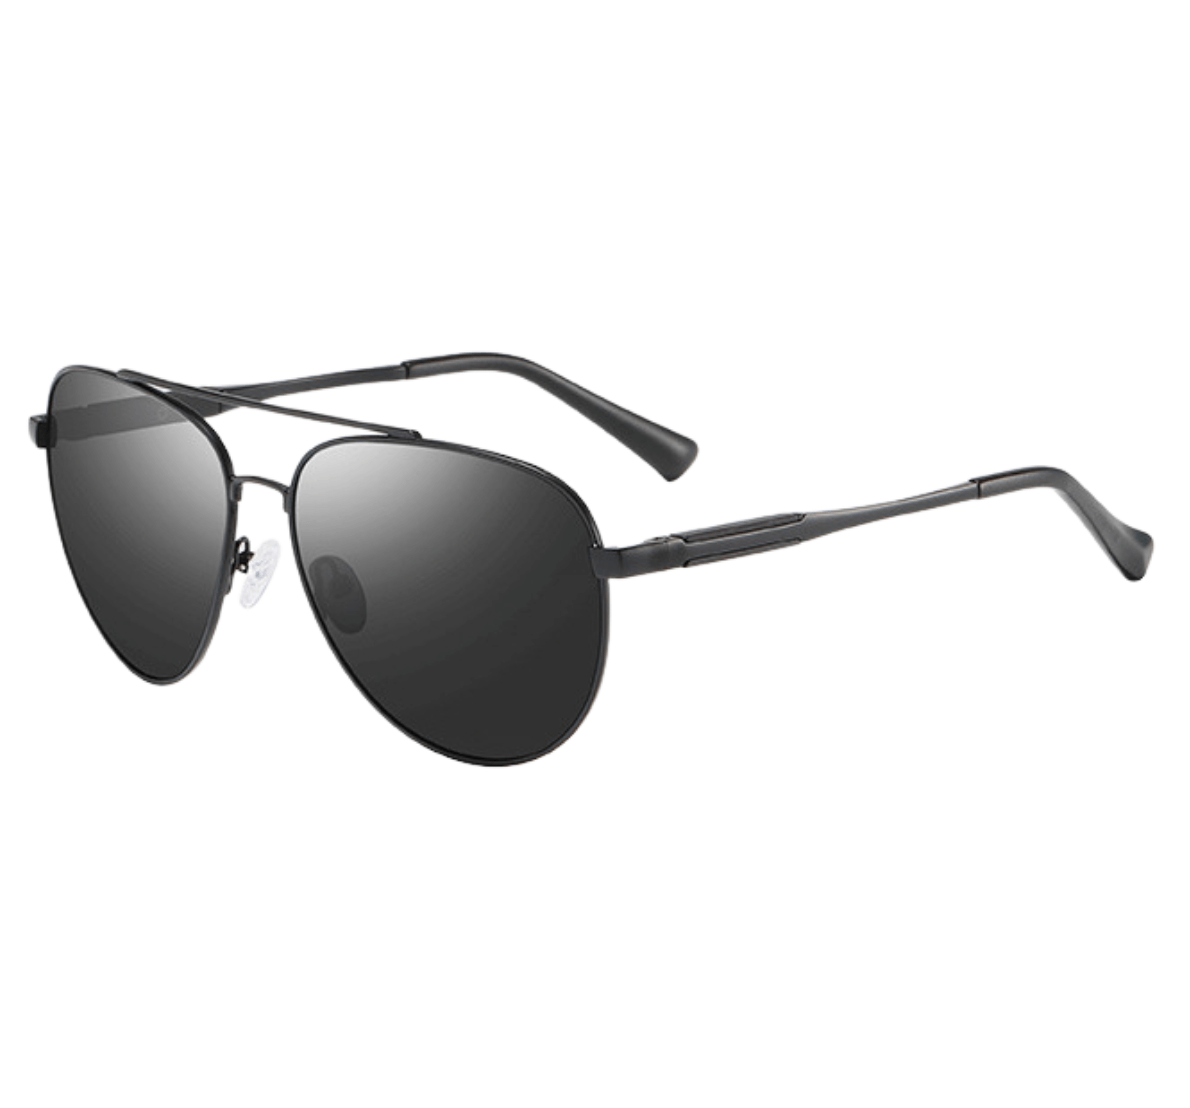 Wholesale Aviator Sunglasses, Polarized Aviator Sunglasses, cheap bulk aviator sunglasses, Wholesale Polarized Sunglasses, polarized sunglasses manufacturers, polarized sunglasses suppliers